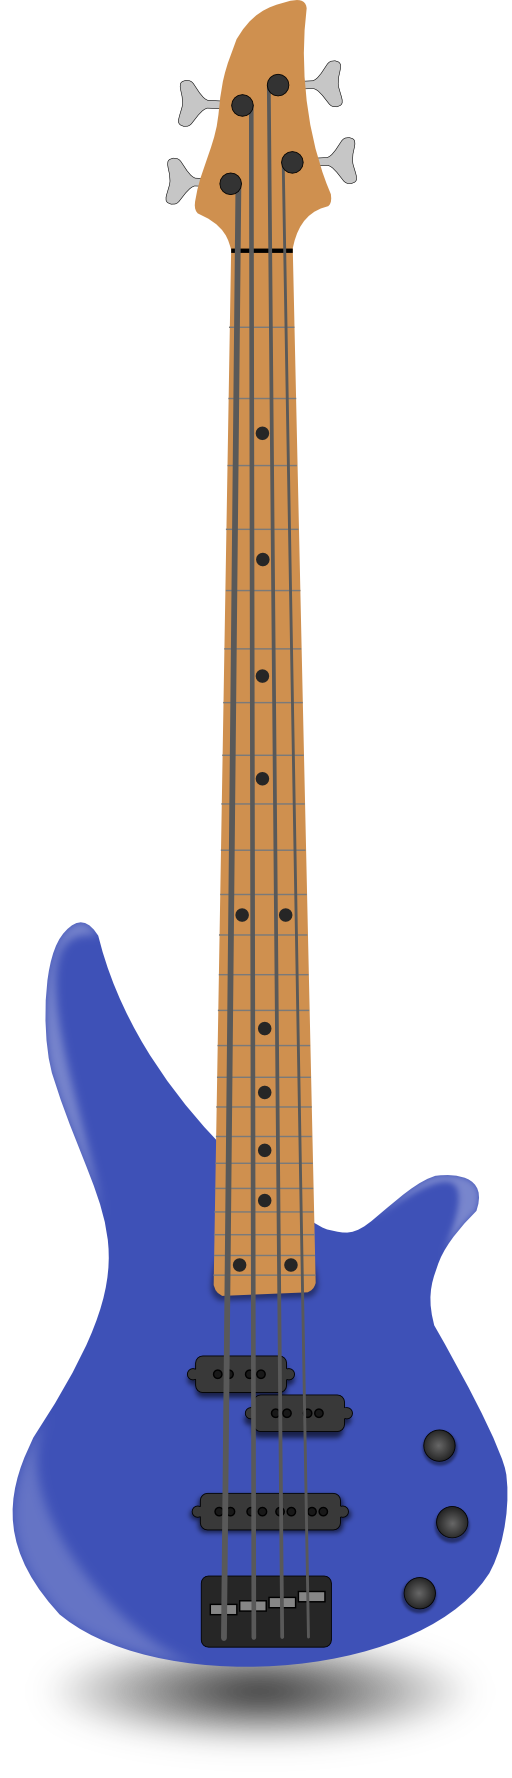 Simple Bass Guitar 4 Strings